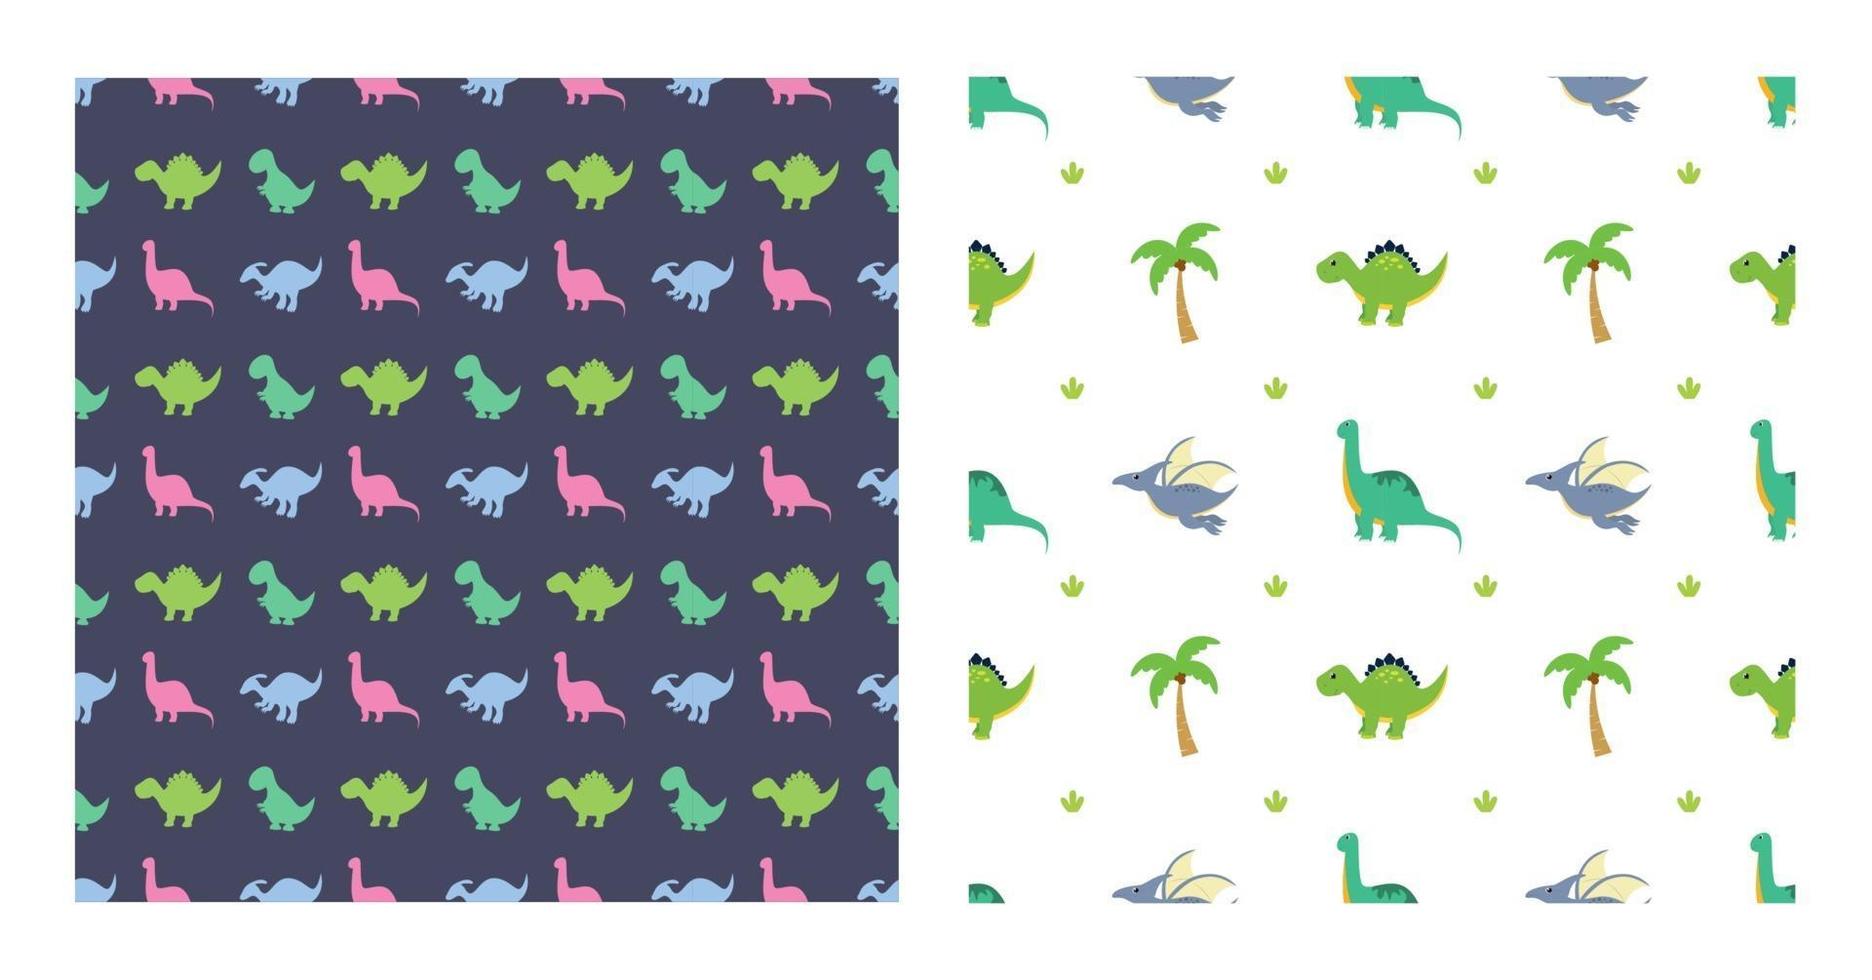 Cute Cartoon Dinosaurs Seamless Pattern as Spinosaurus, Parasaurolophus, Stegosaurus, Tyrannosaurus, Pterodactyl, and Diplodocus To Wallpaper Background or Posters. Illustration vector